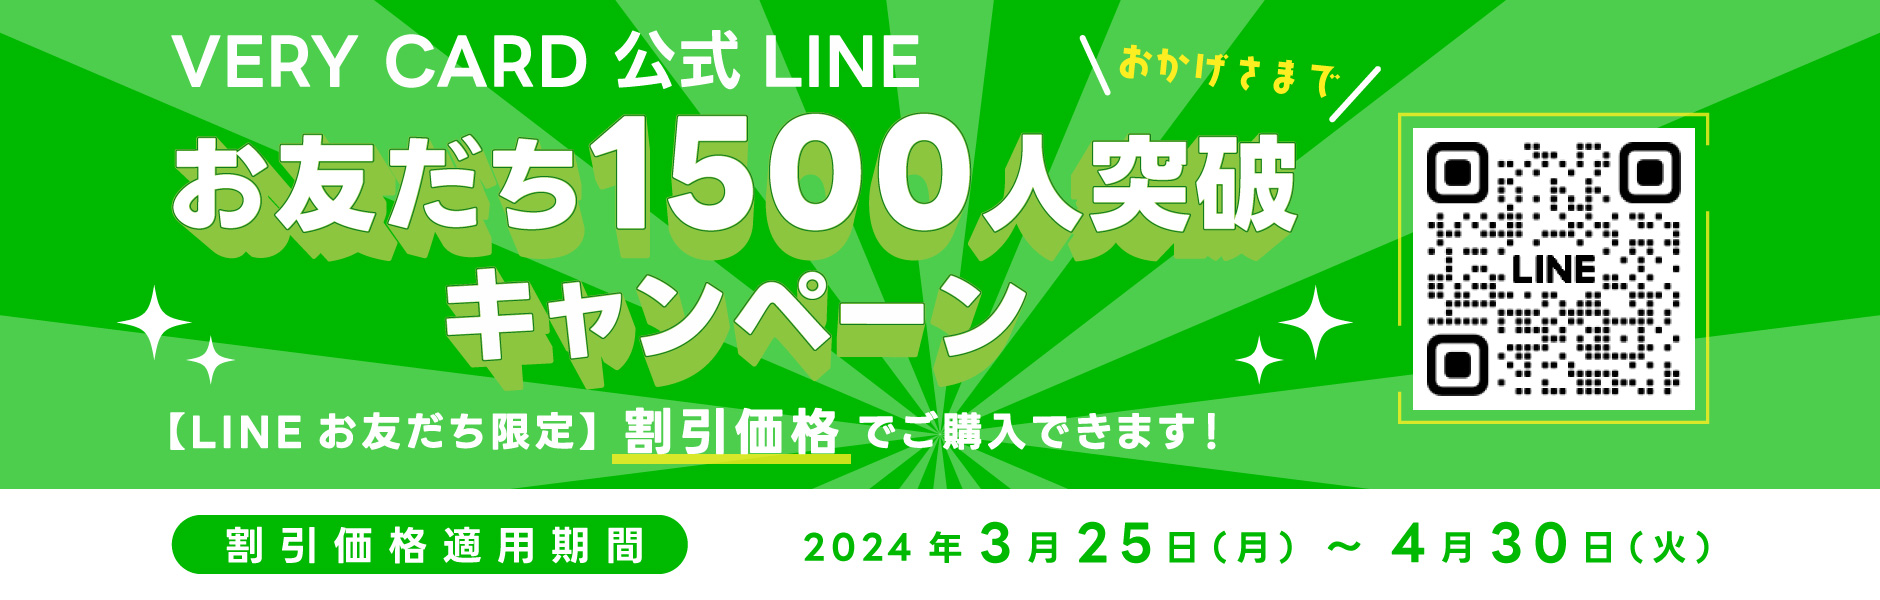 VERY CARD 公式LINE 1500人突破キャンペーン中